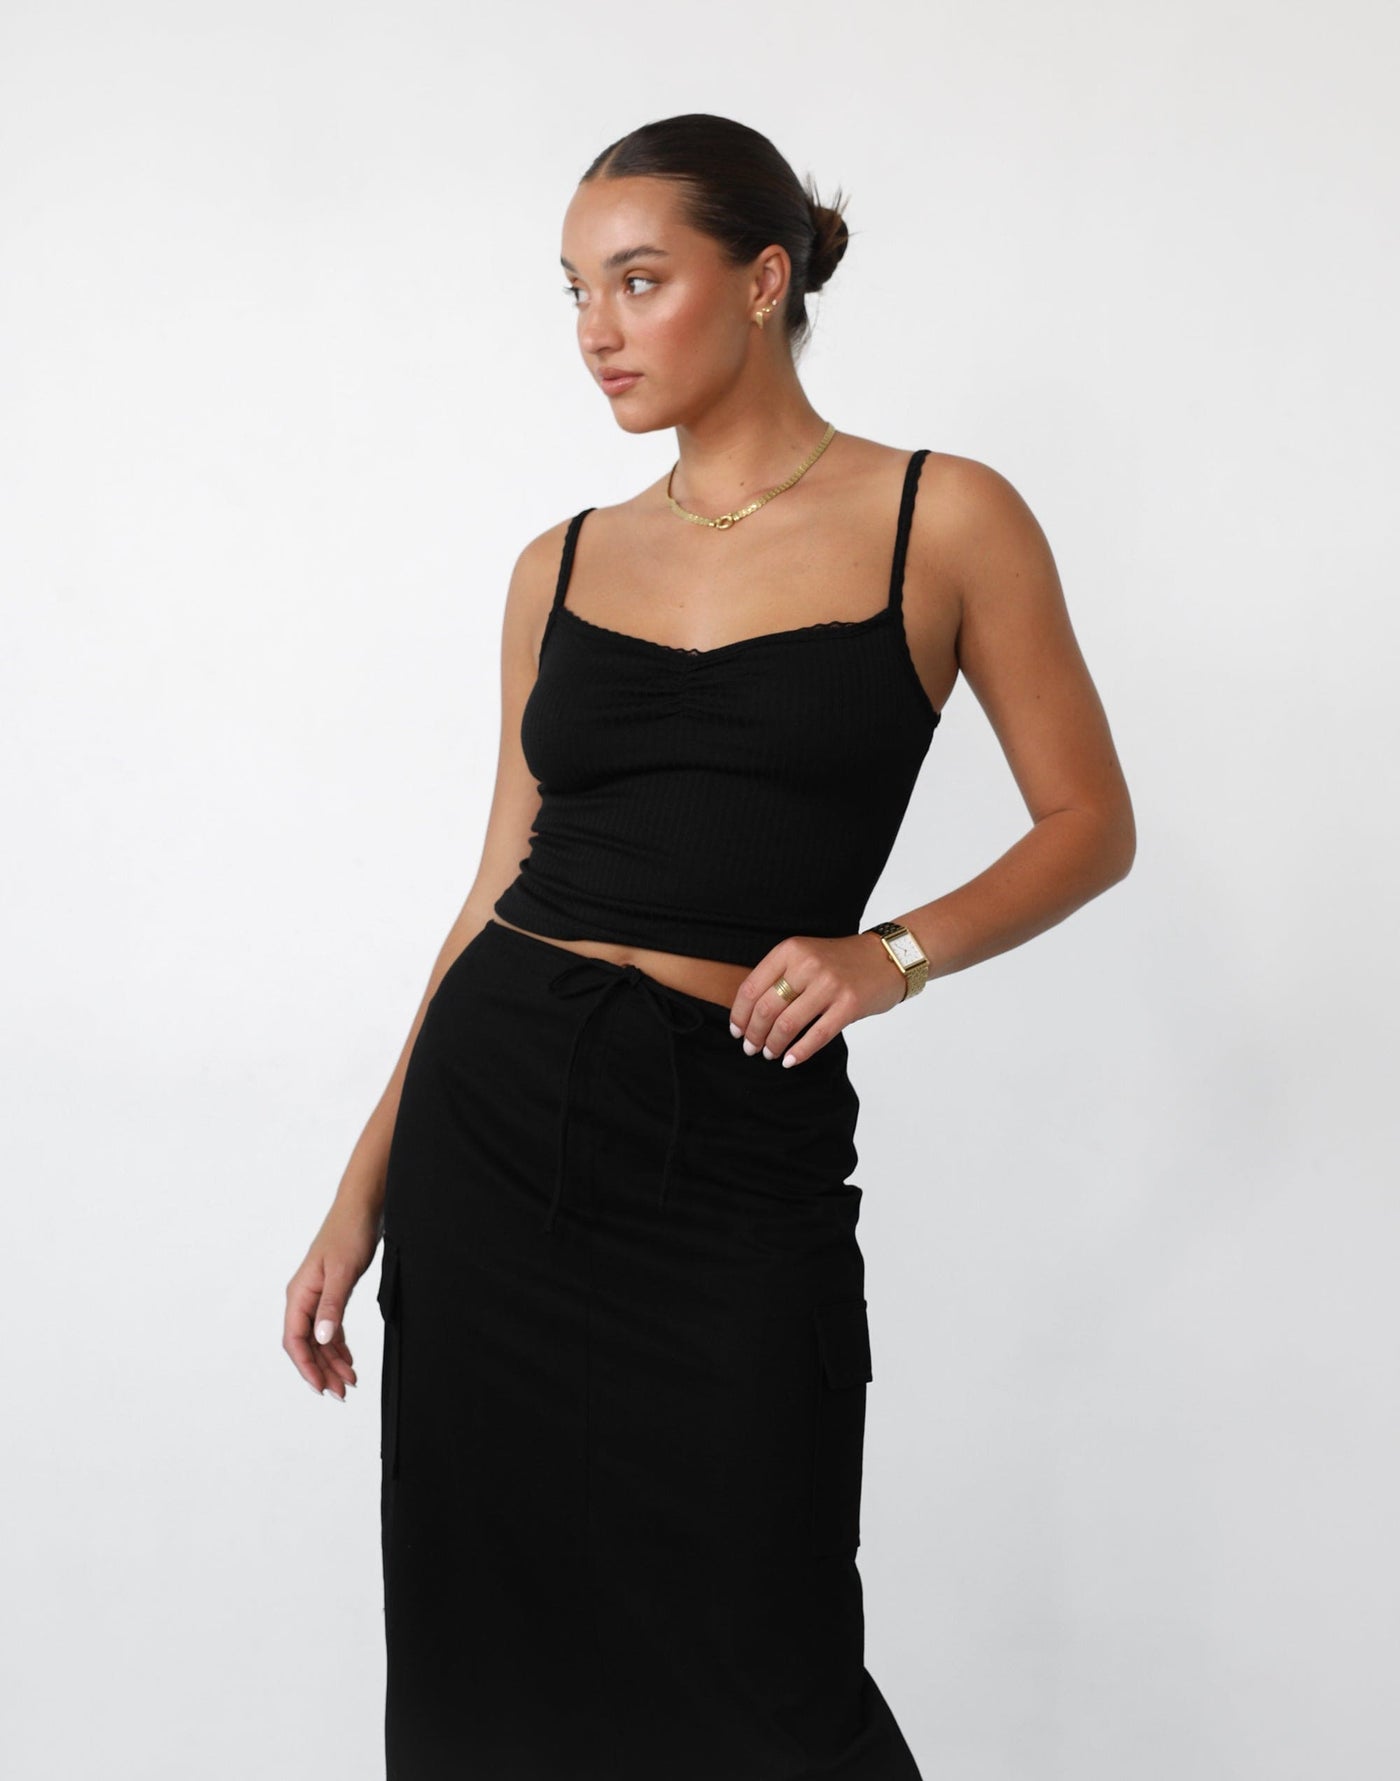 Not Now Maxi Skirt (Black) - Adjustable Waist Drawstring Cargo Maxi Skirt With Slit - Women's Skirt - Charcoal Clothing